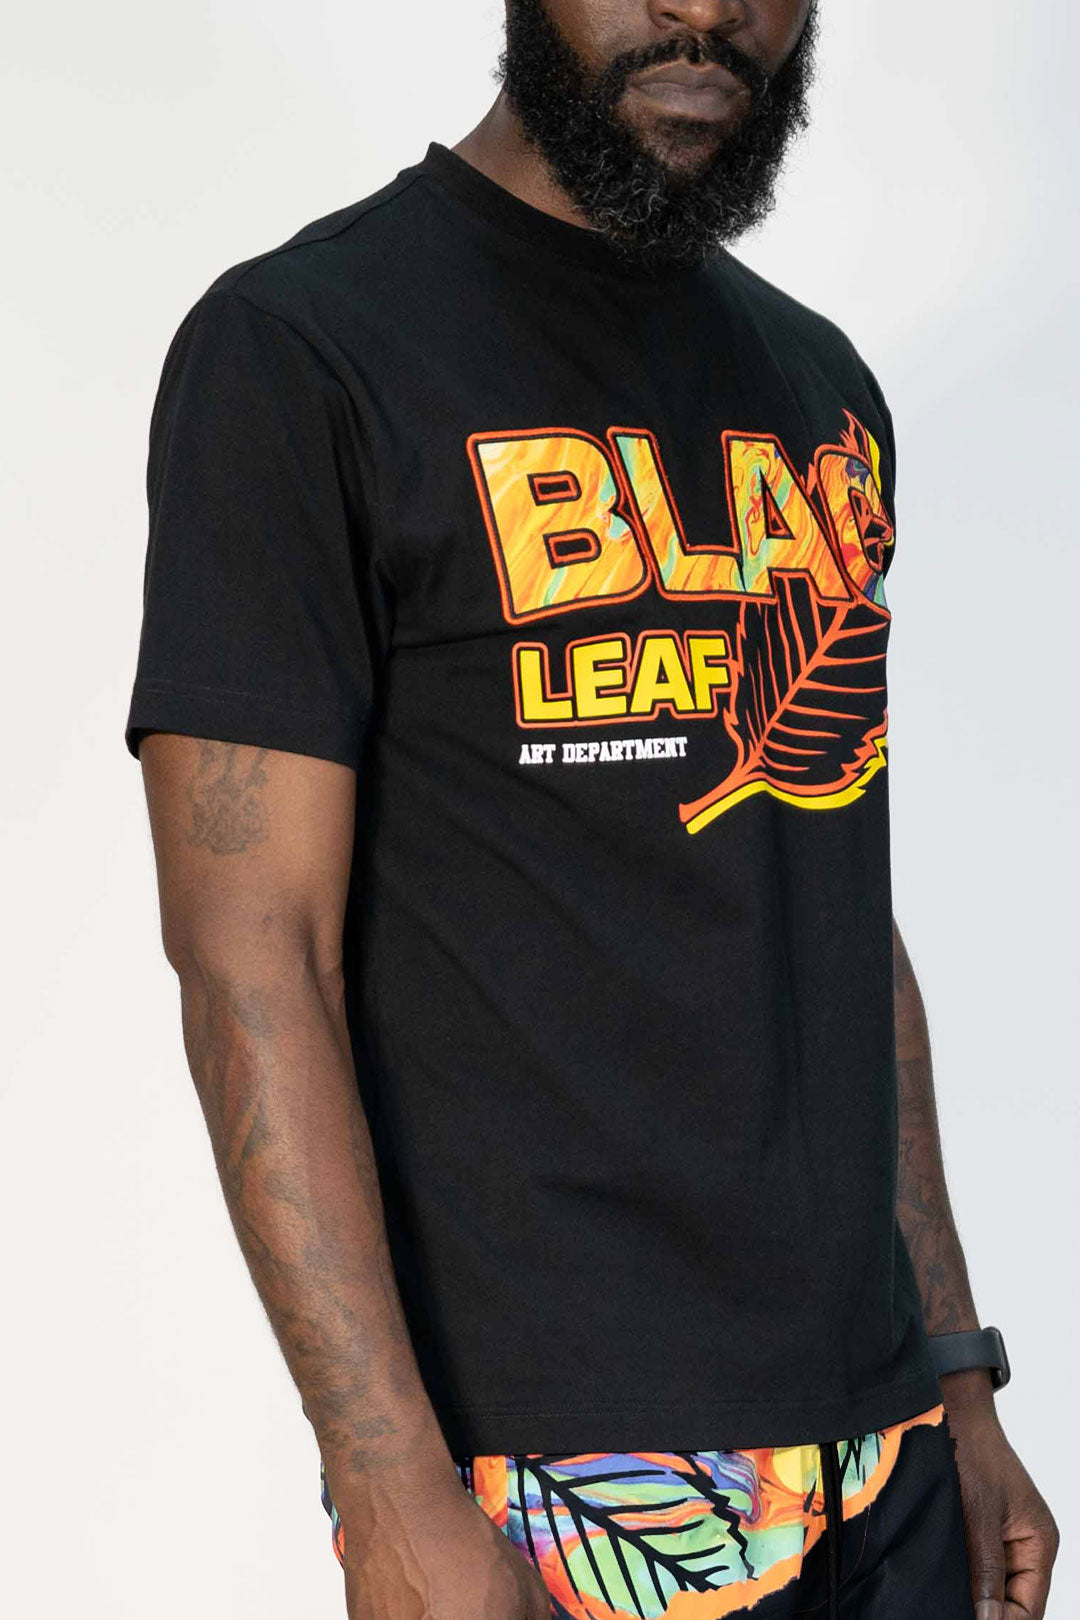 BLAC LEAF ART DEPARTMENT SHIRT